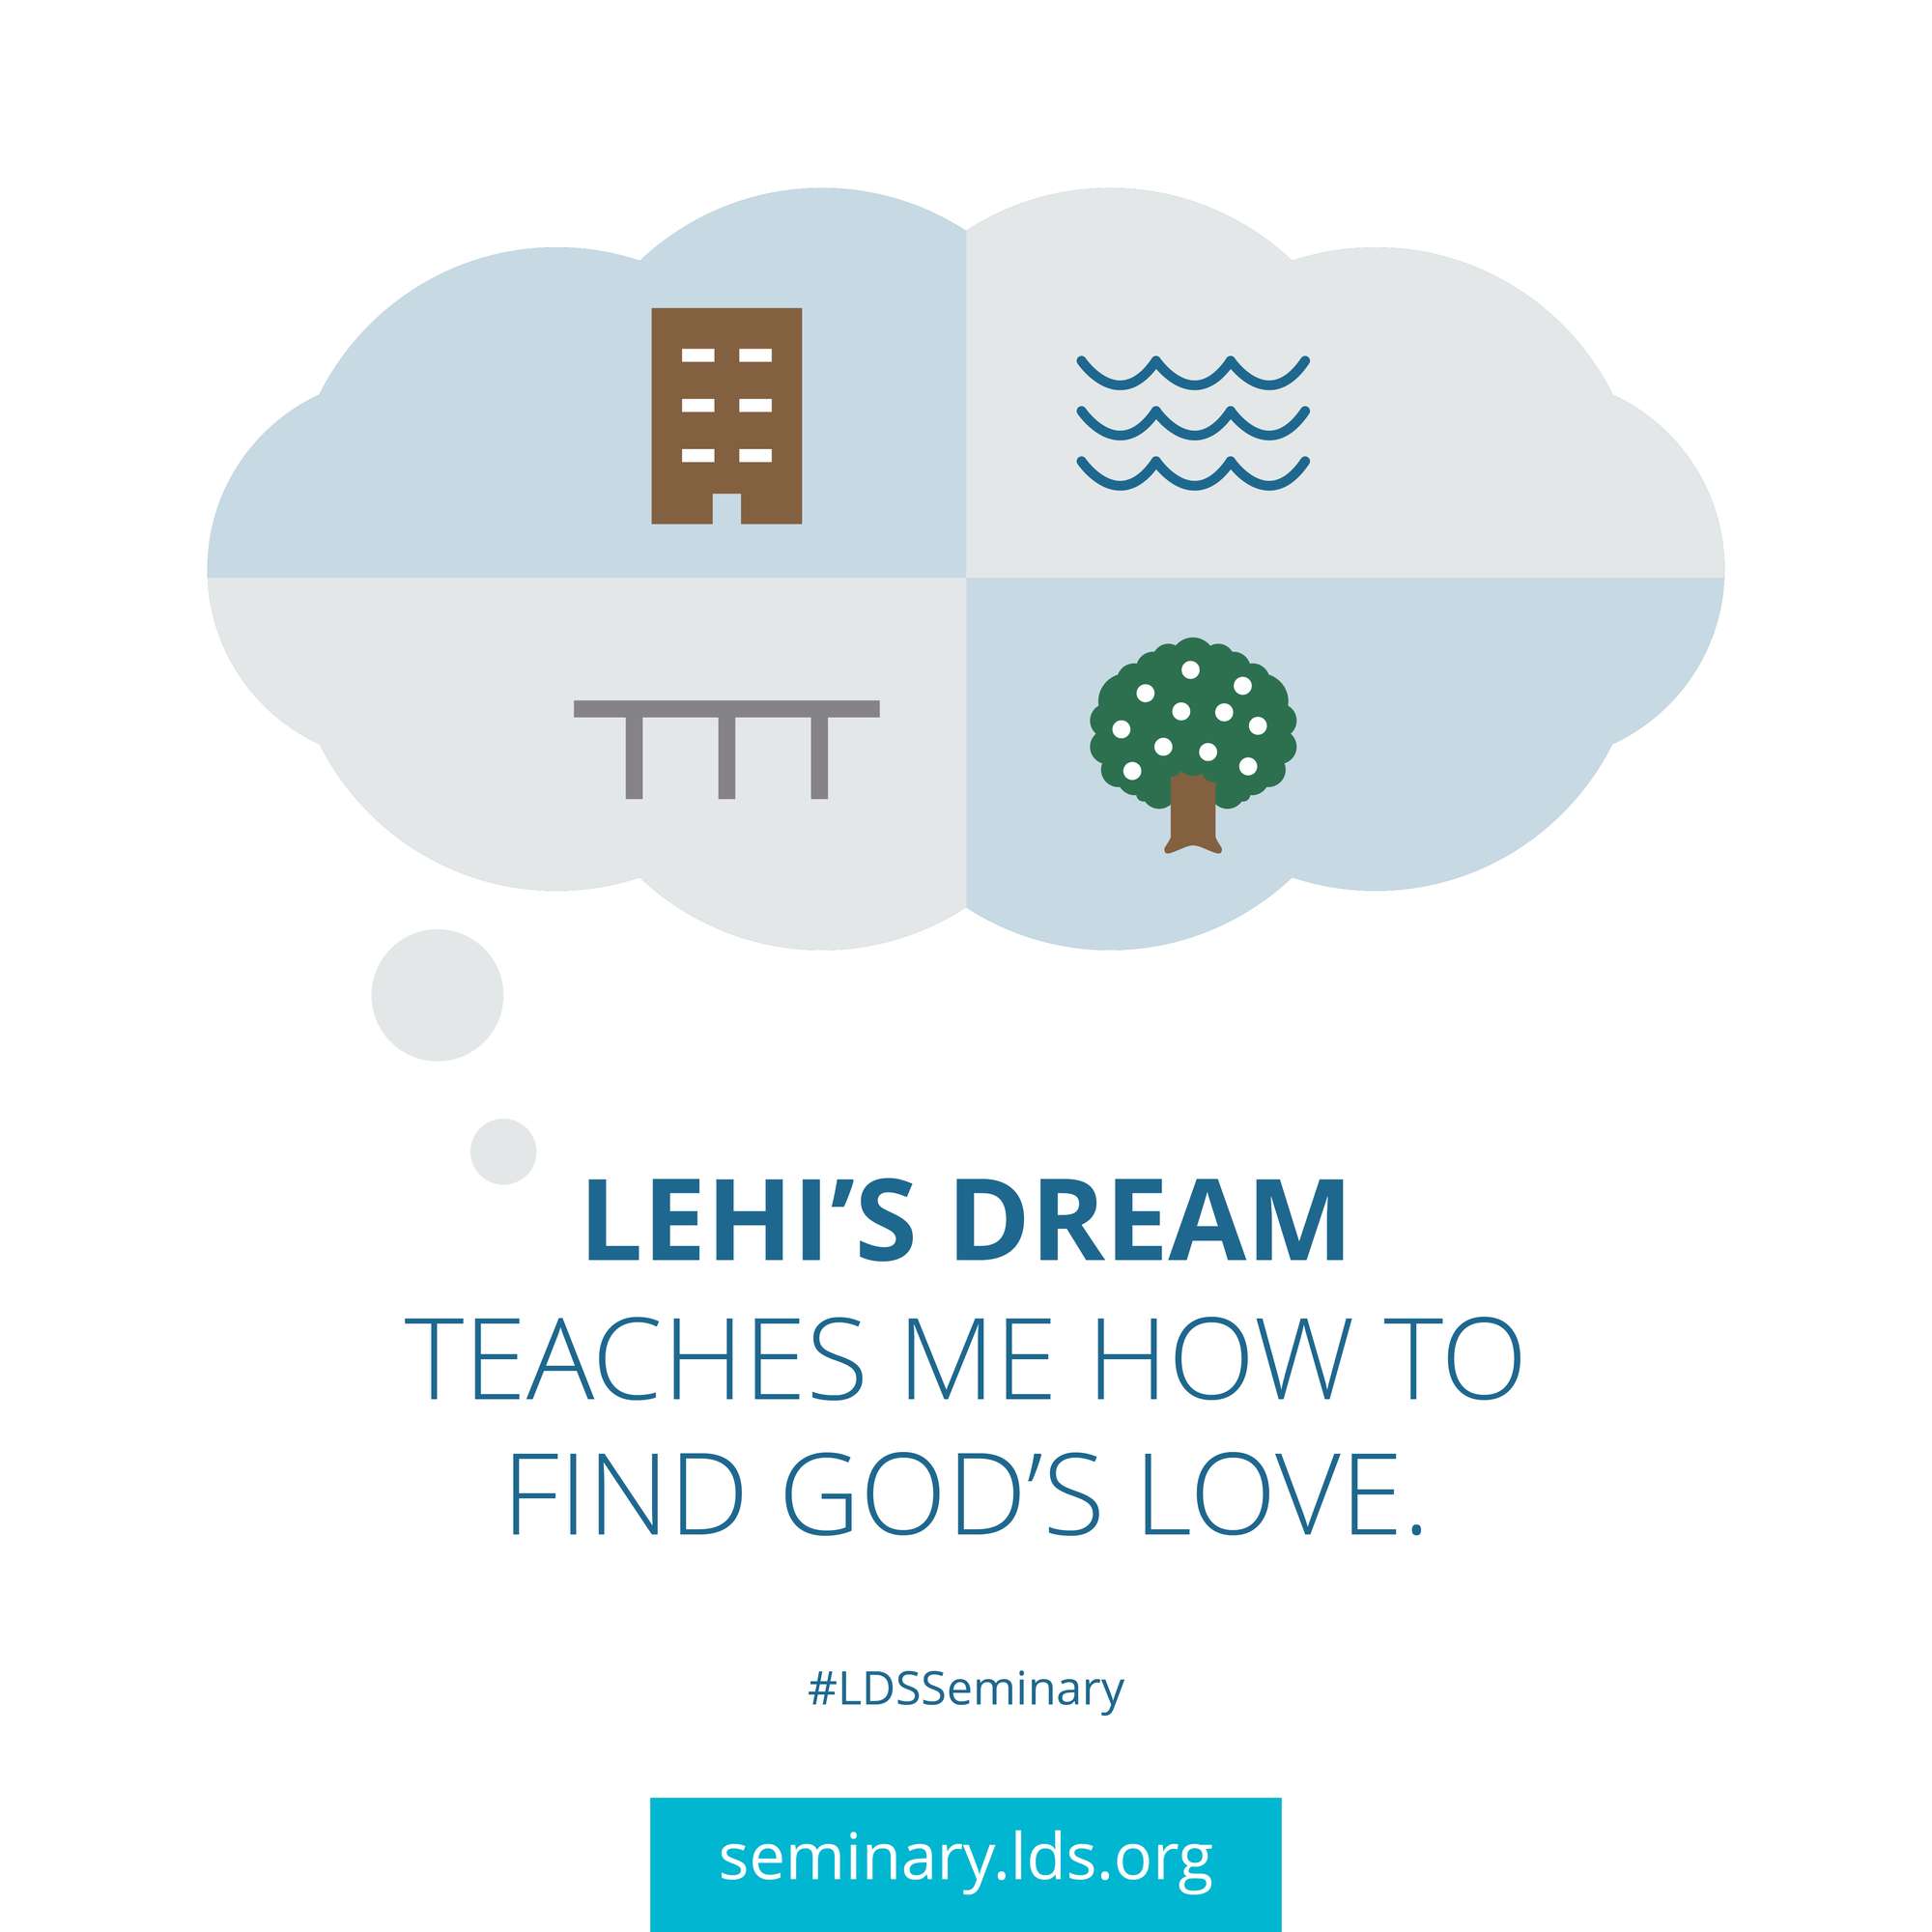 Lehi's dream